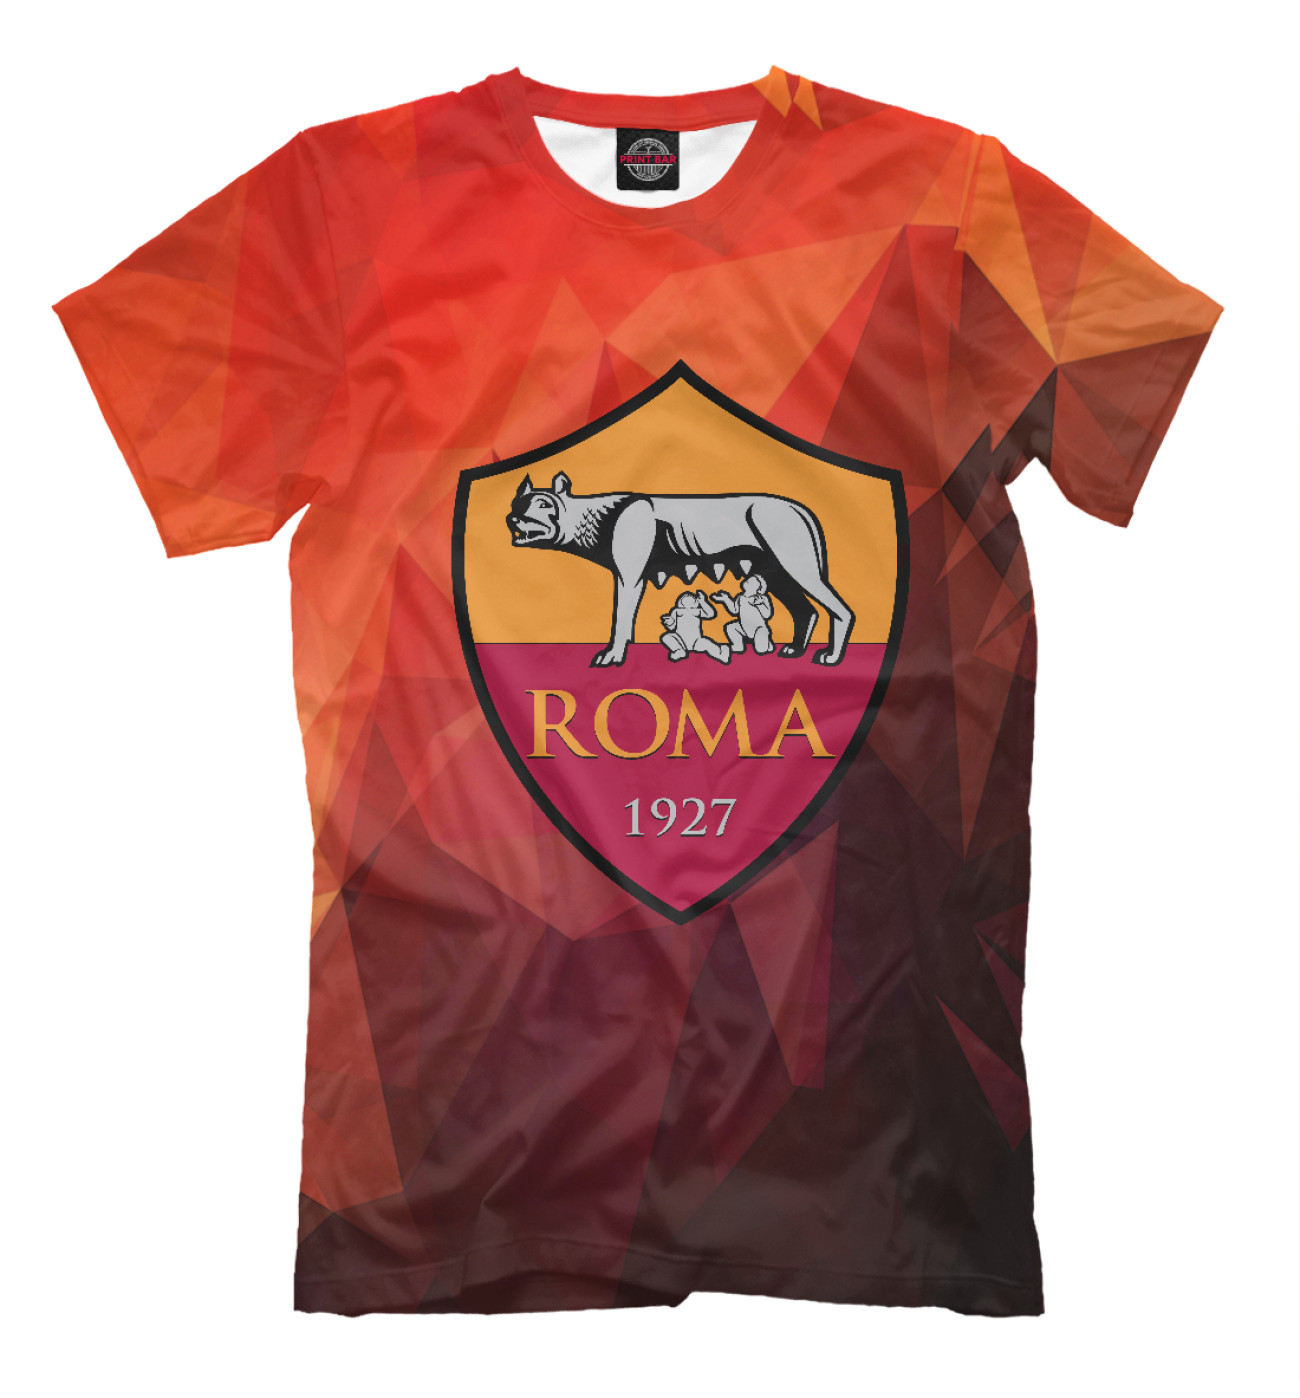 Мужская Футболка Roma / Рома, артикул: RMA-785580-fut-2